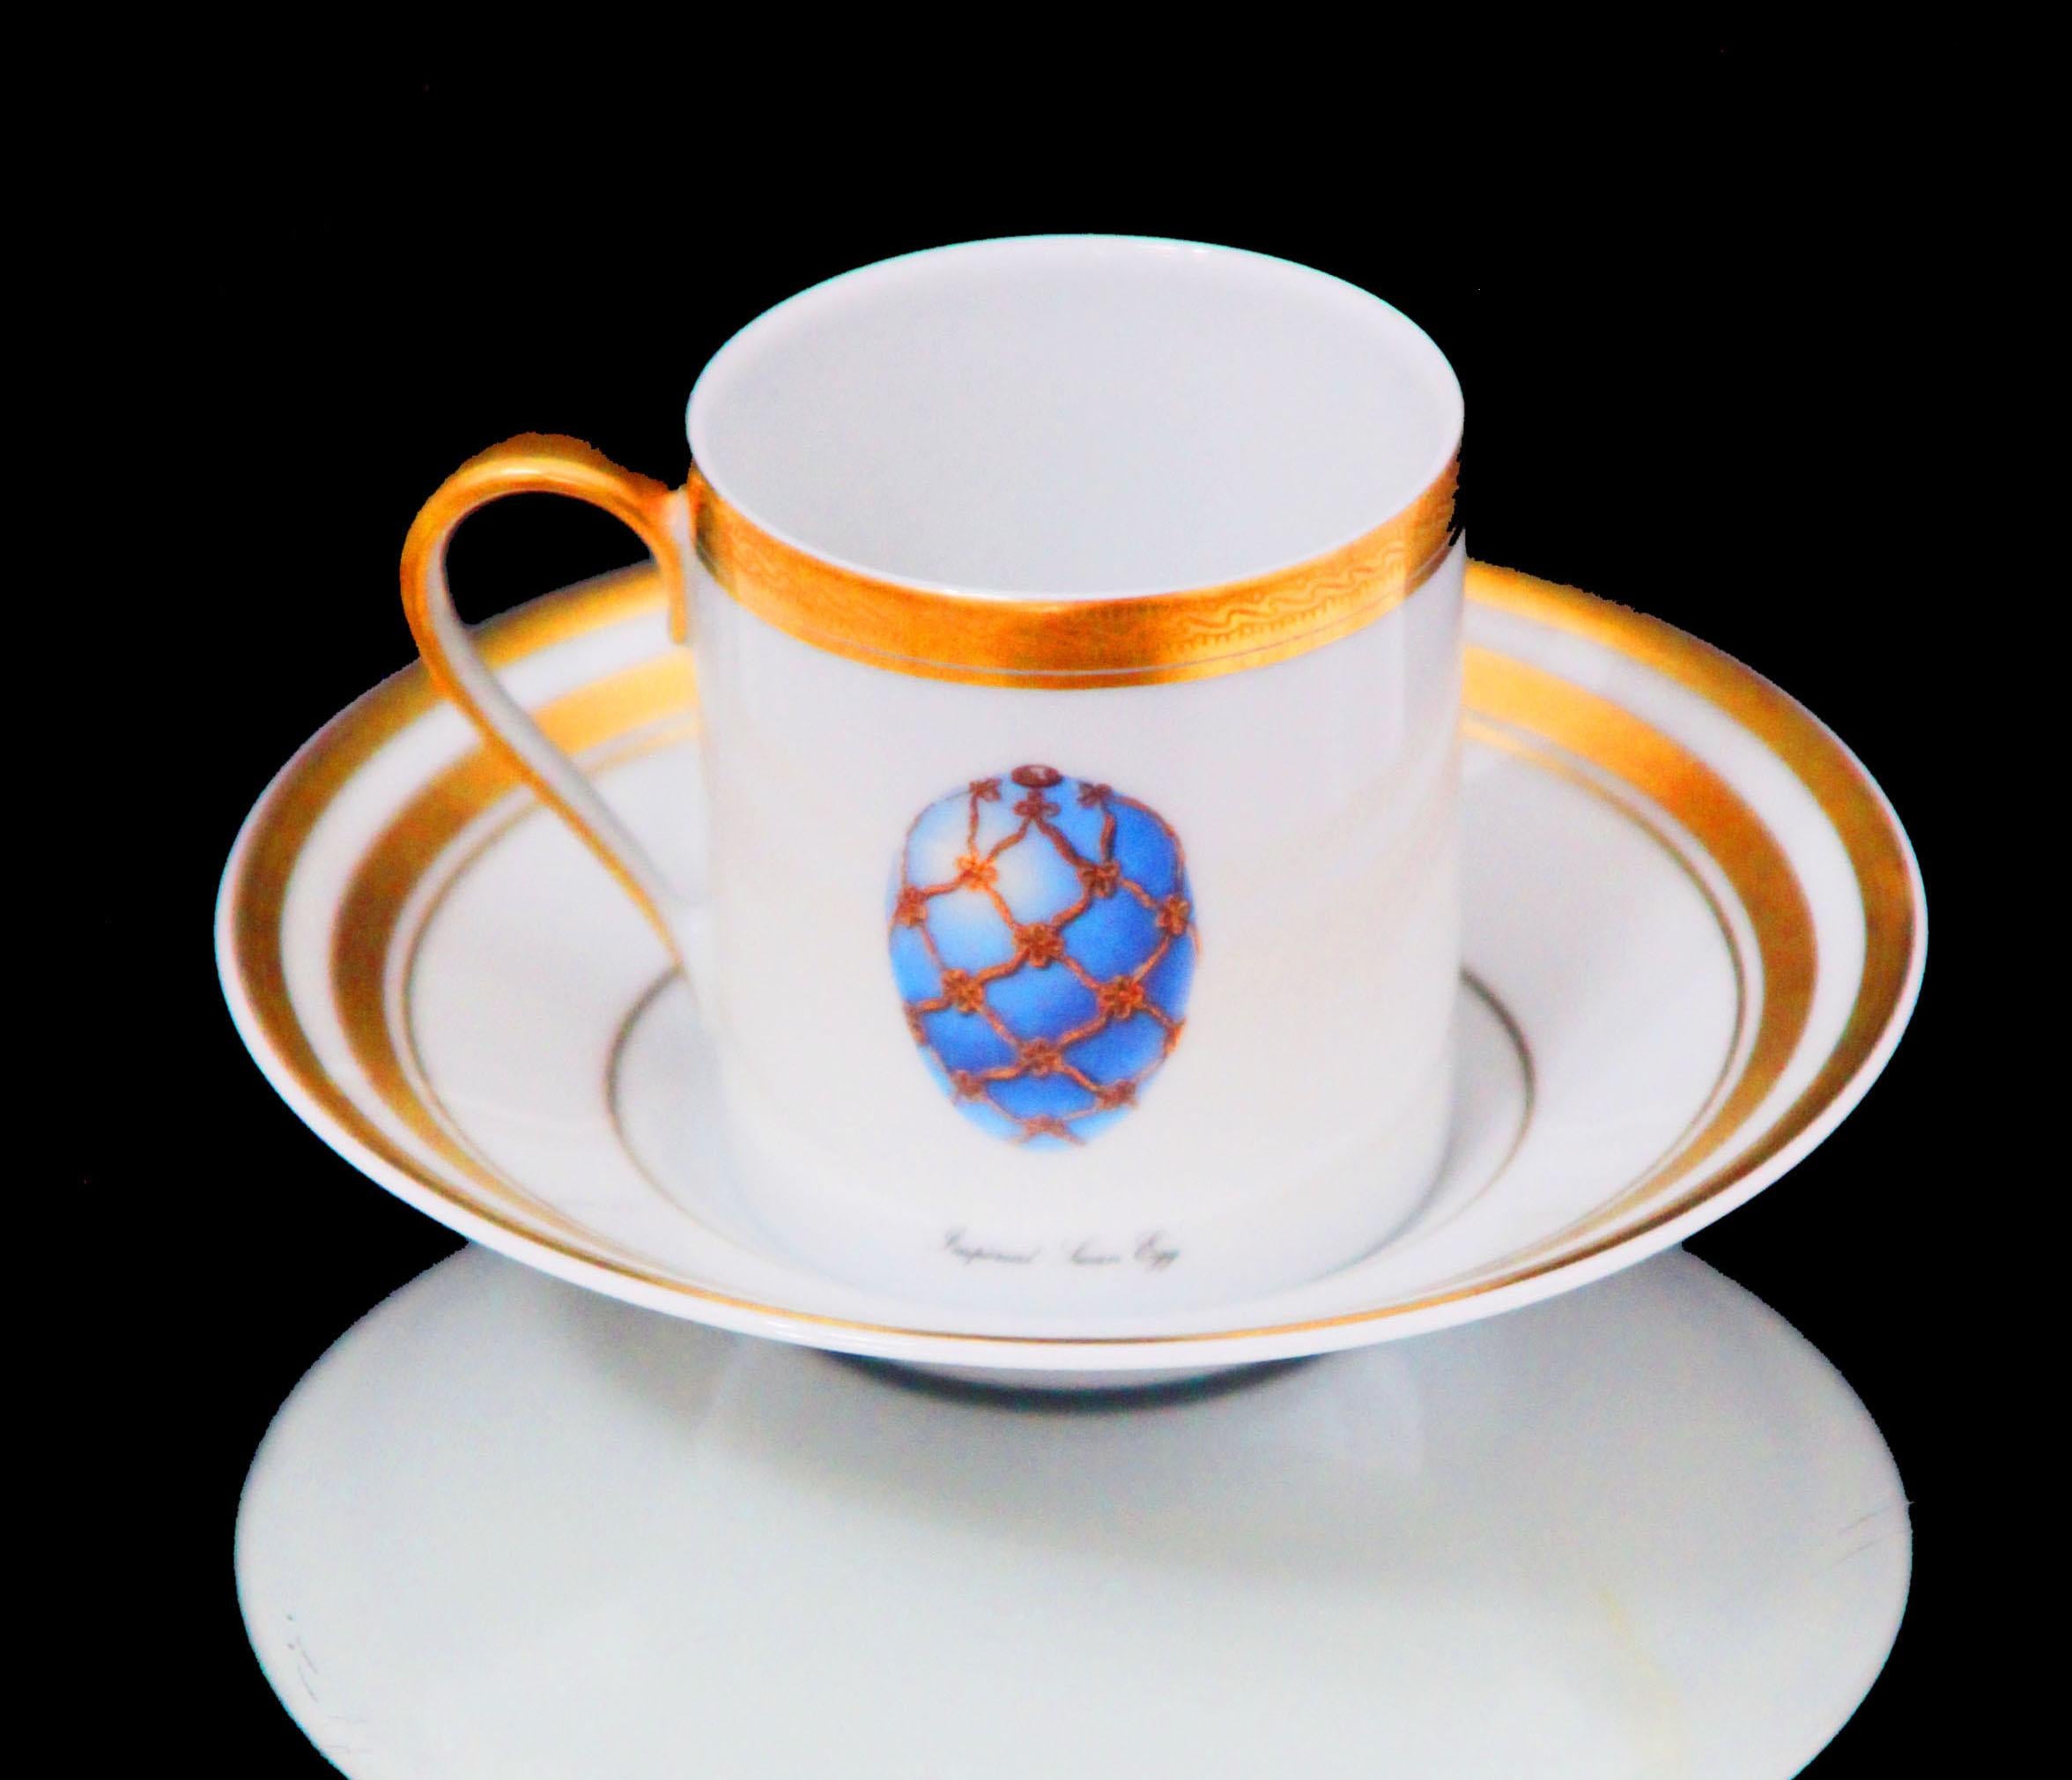 Boin-Taburet & Faberge, - 8pc. 950 Sterling Tea Set + 6 Faberge Espresso Cups For Sale 11